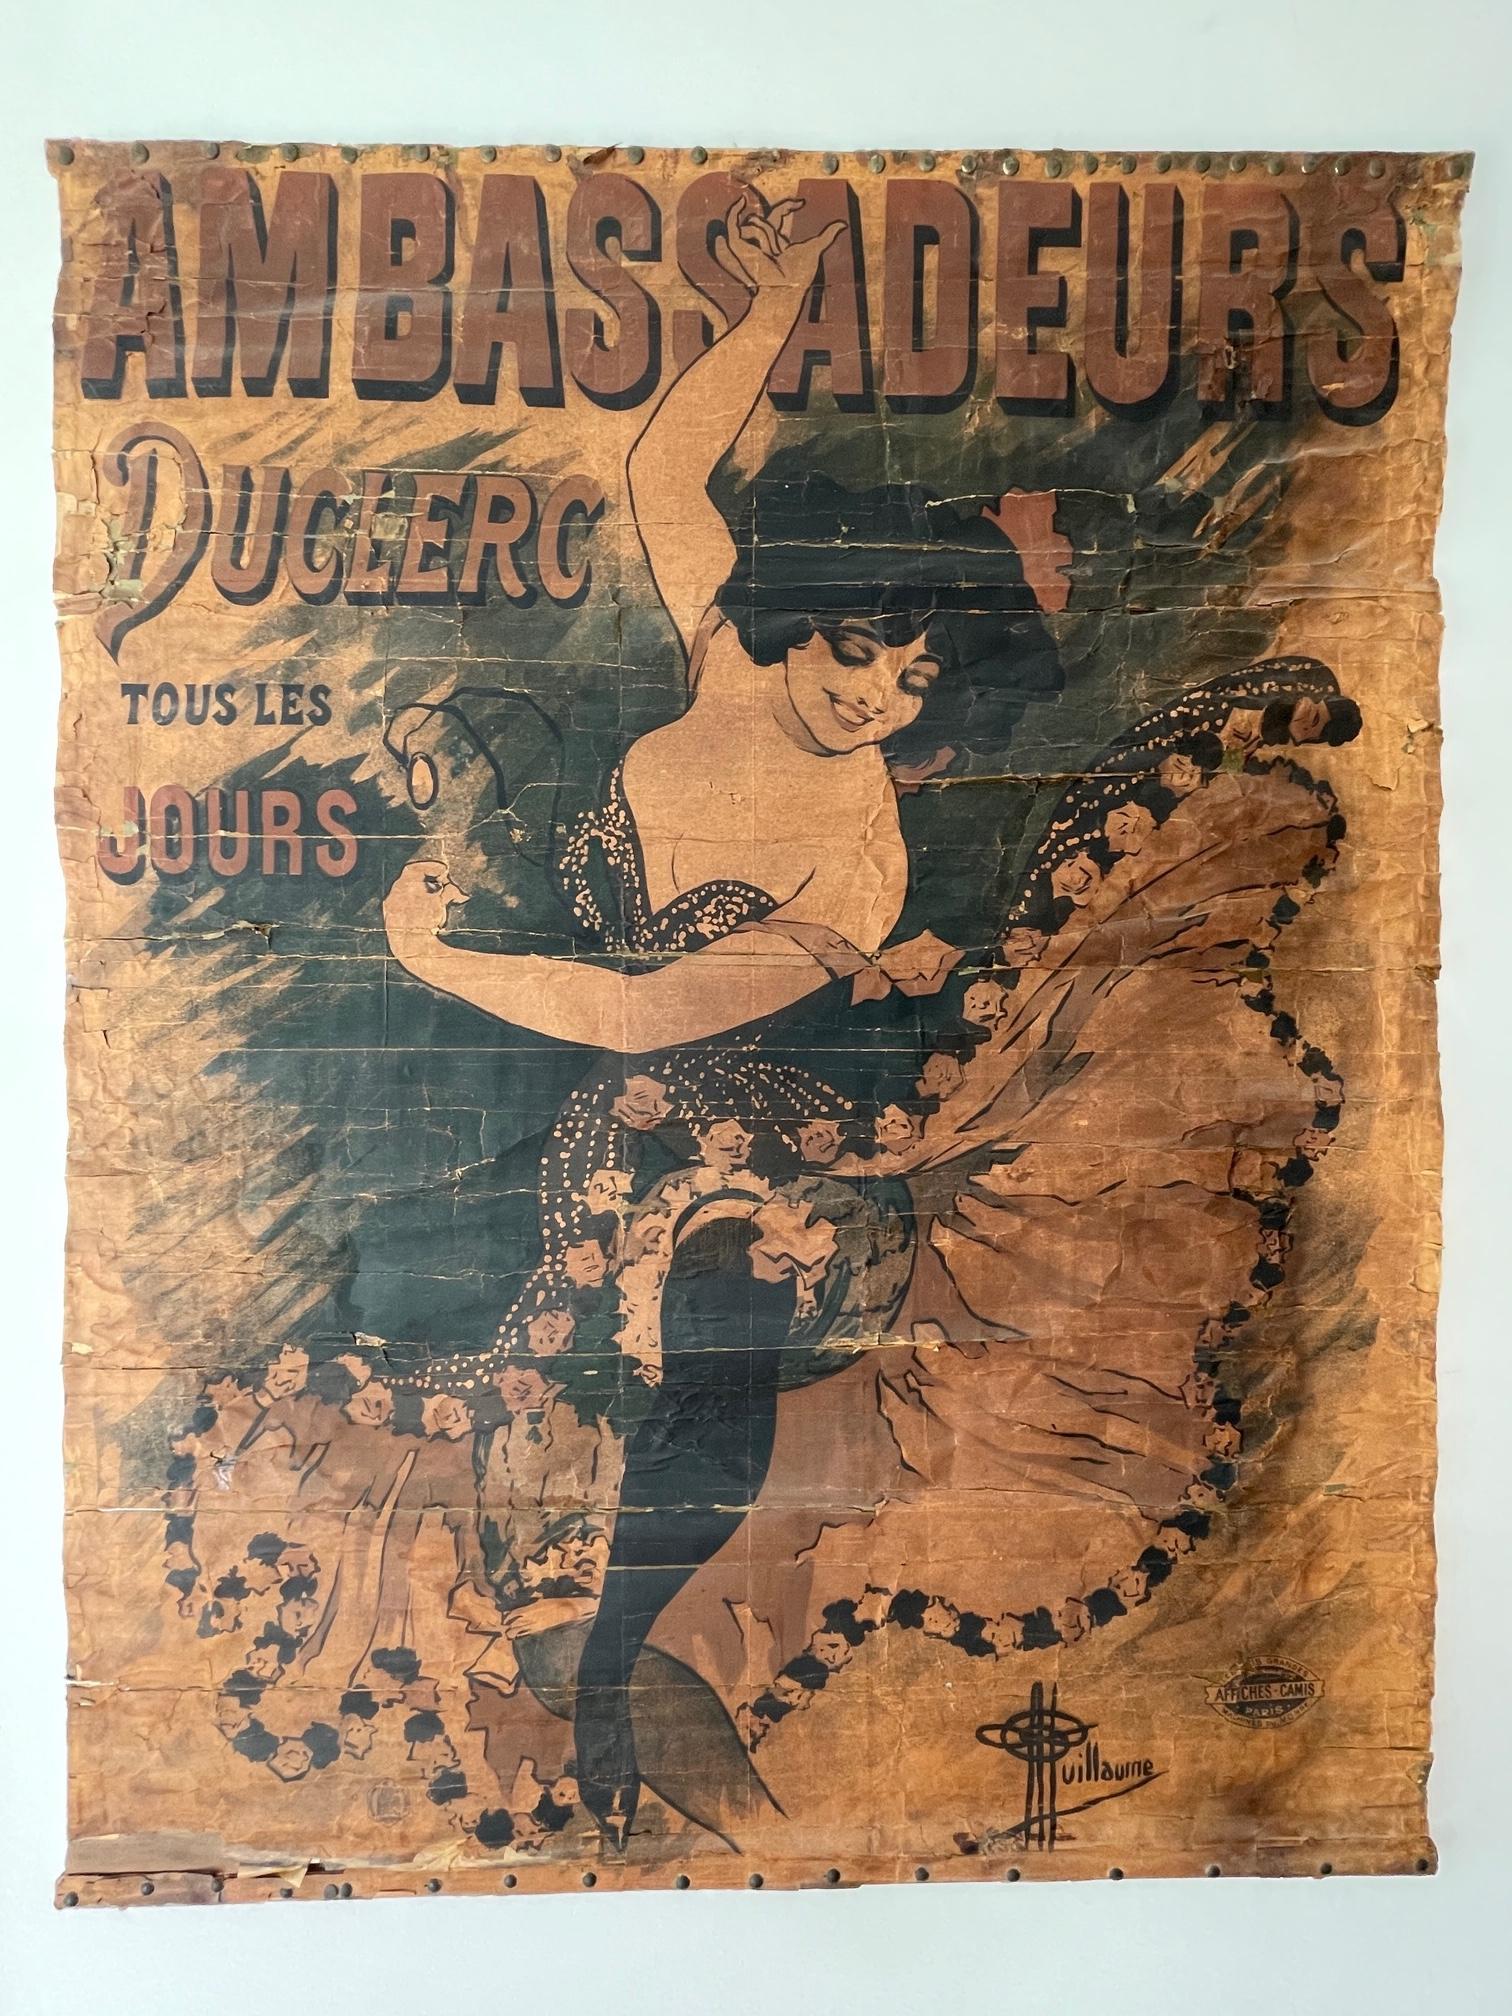 1894 Antike affiche / Poster Ambassadeurs Duclerc tous les jours - Guillaume im Angebot 2